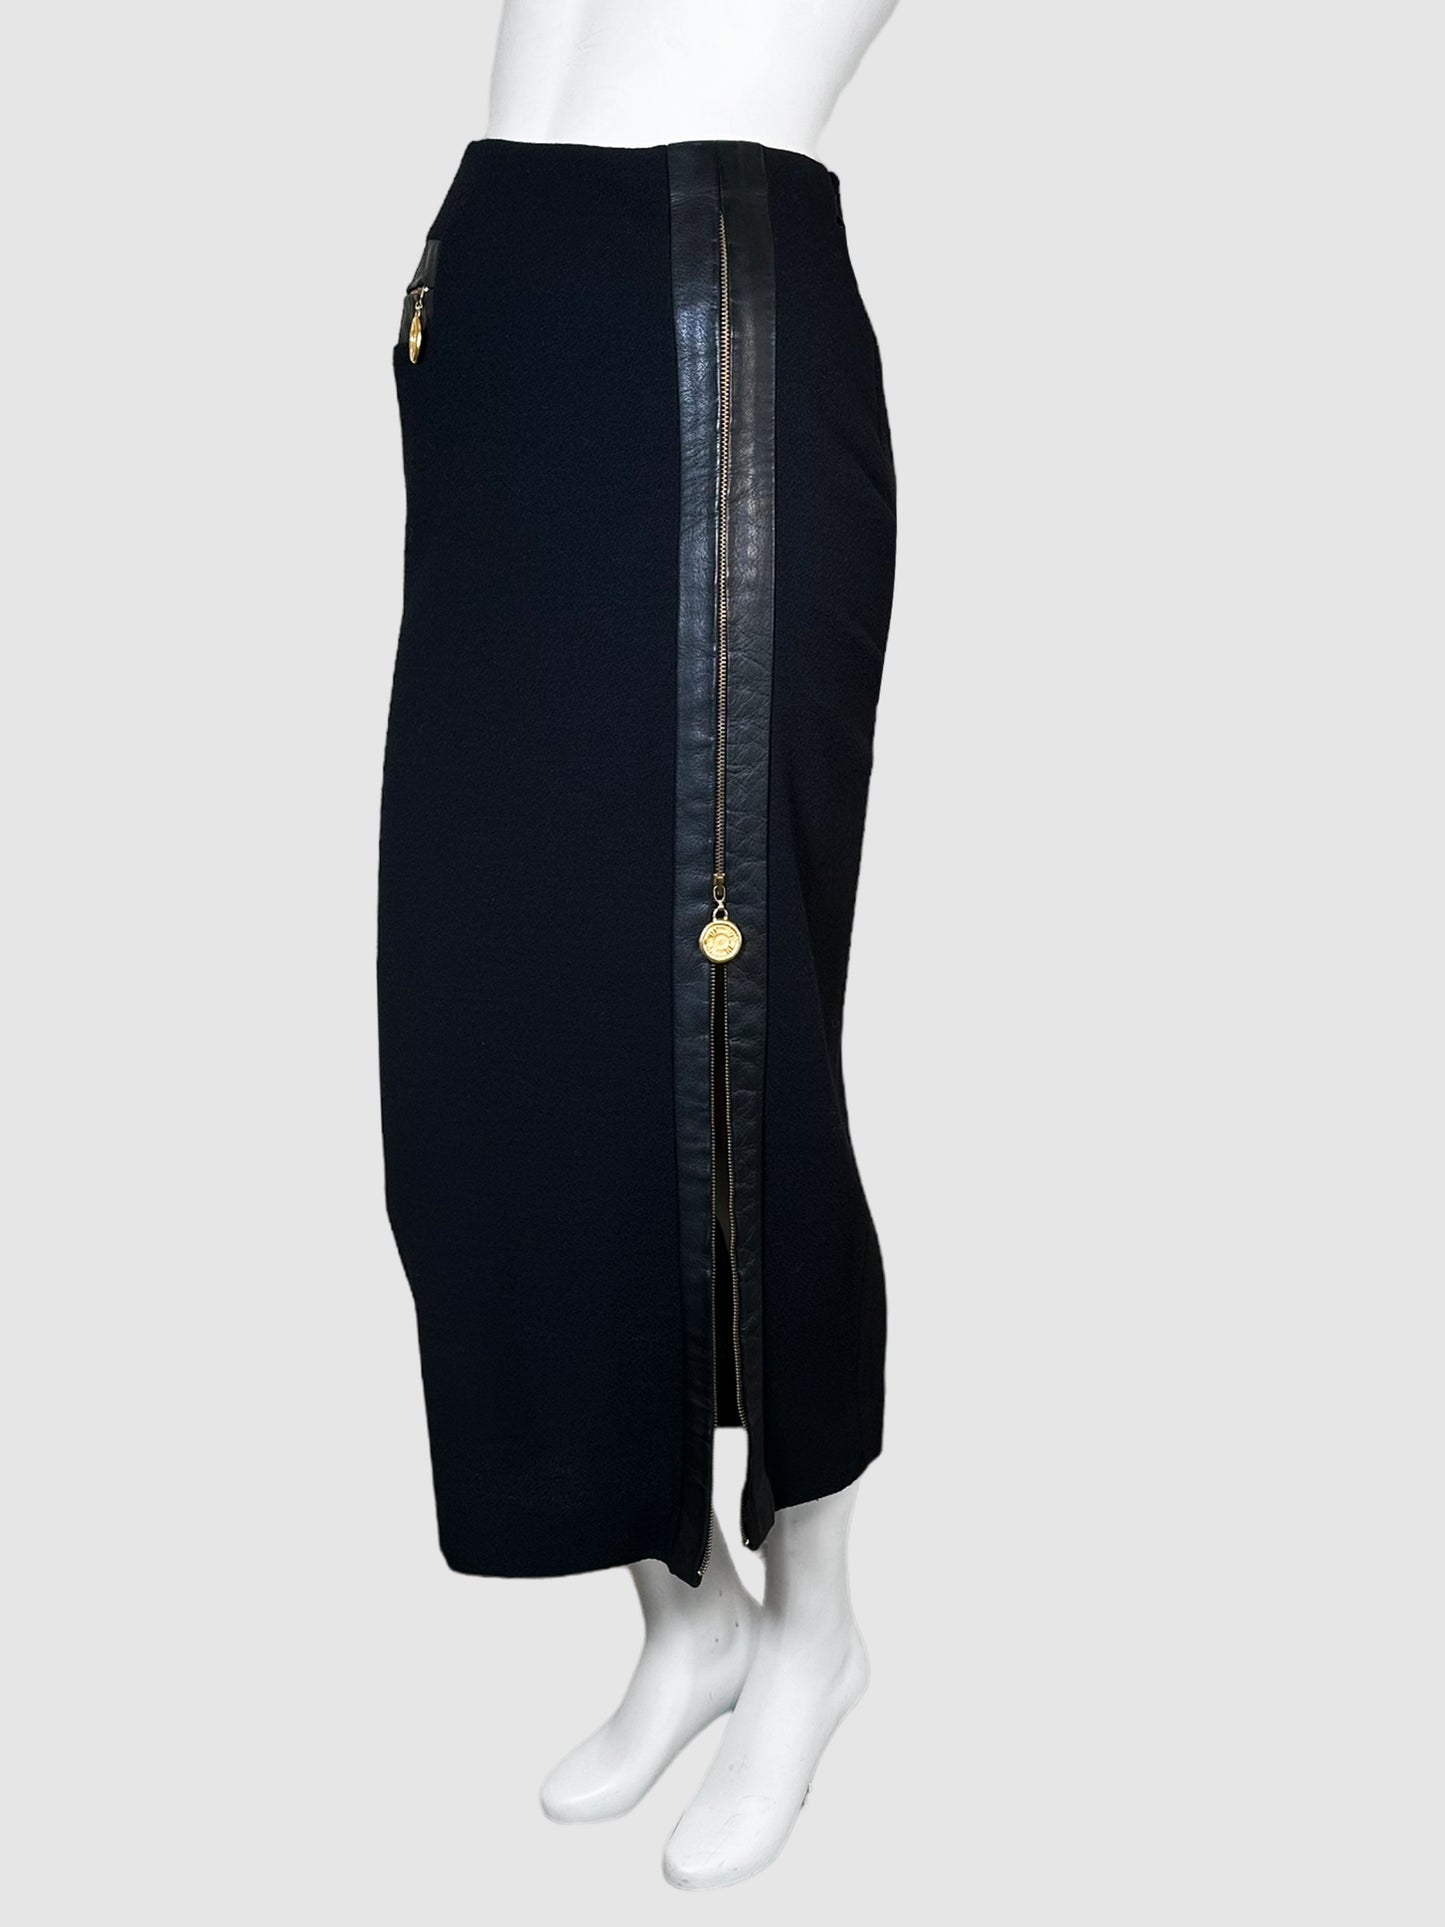 Donna Karan Wool Midi Skirt - Size 10